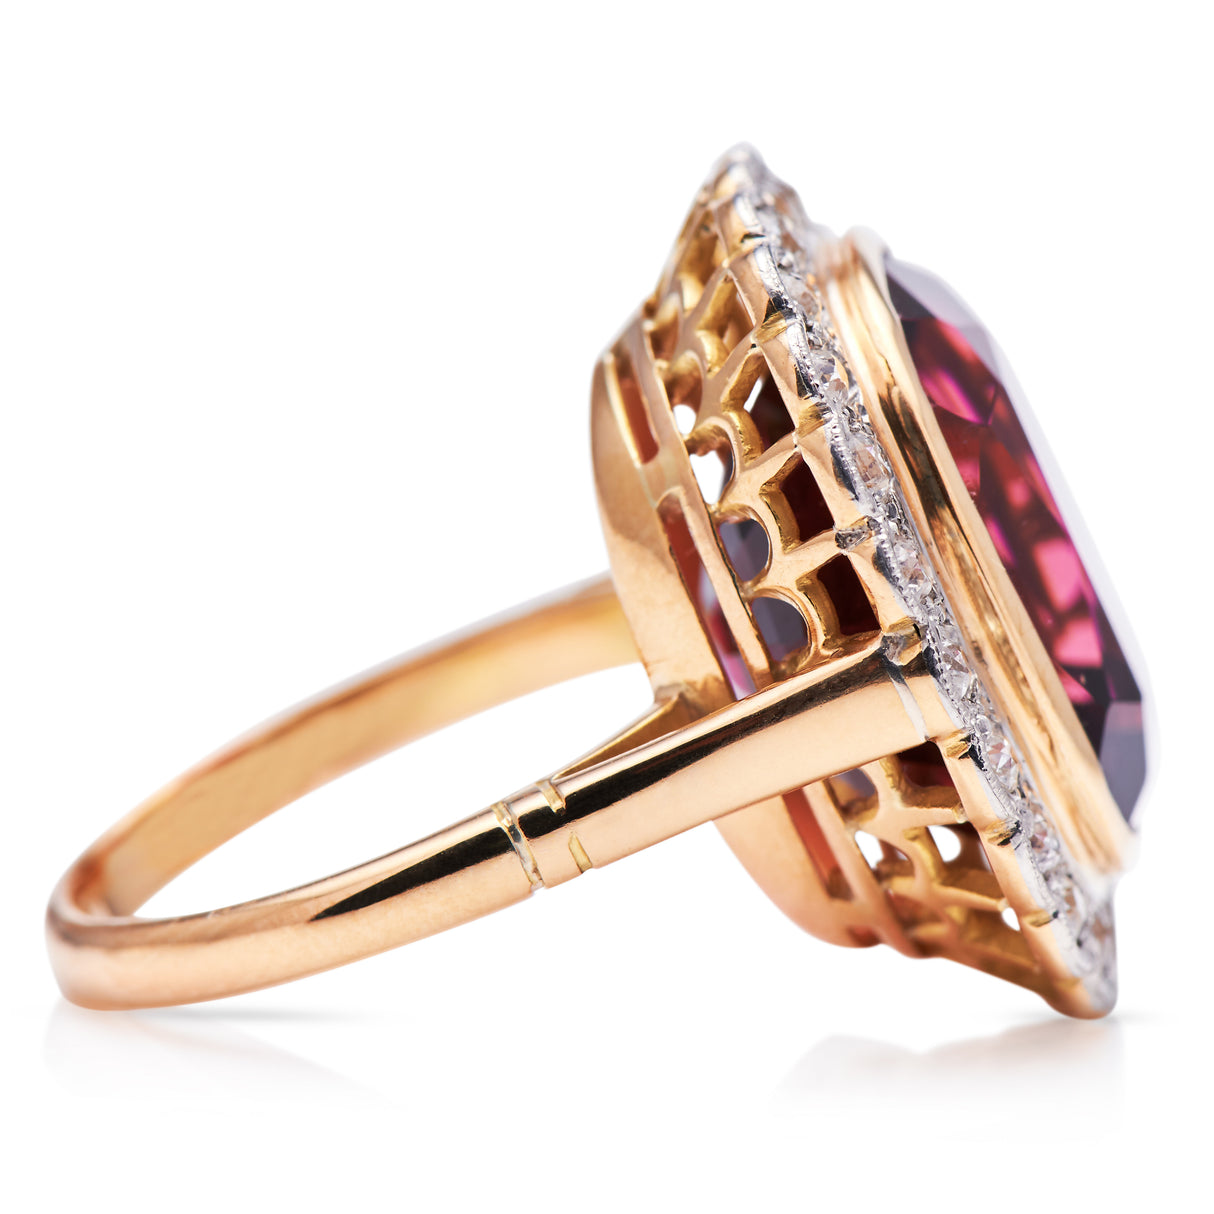 Edwardian, 18ct Gold, Rubellite Tourmaline and Diamond Ring